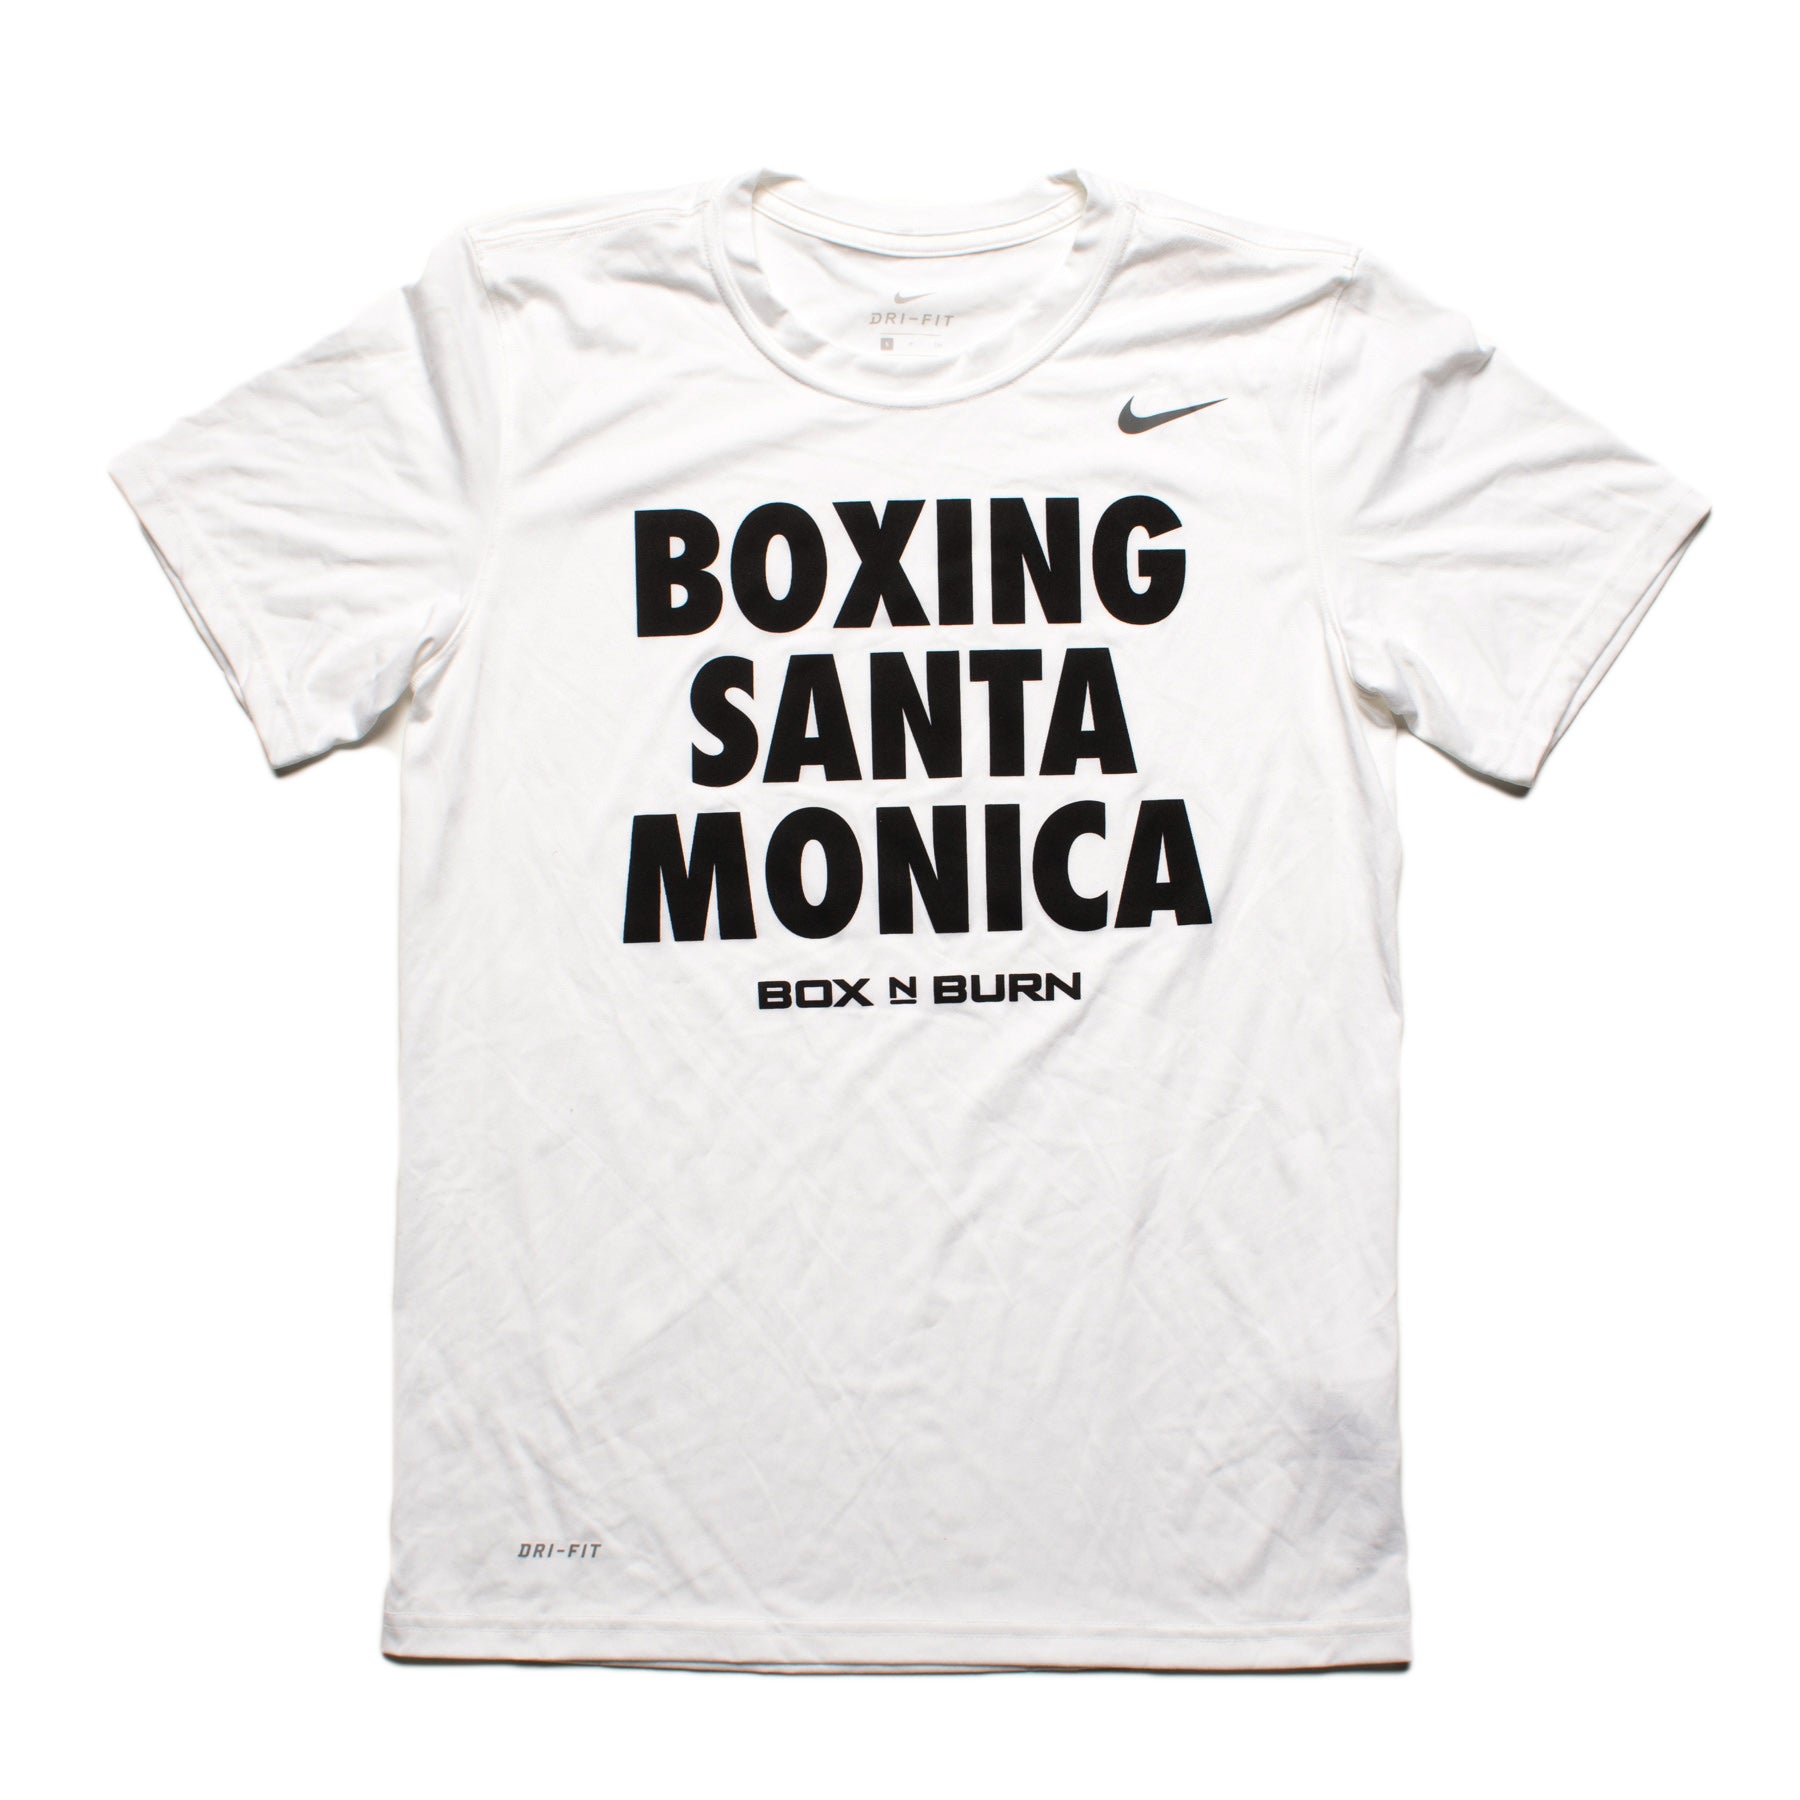 nike boxing t shirt